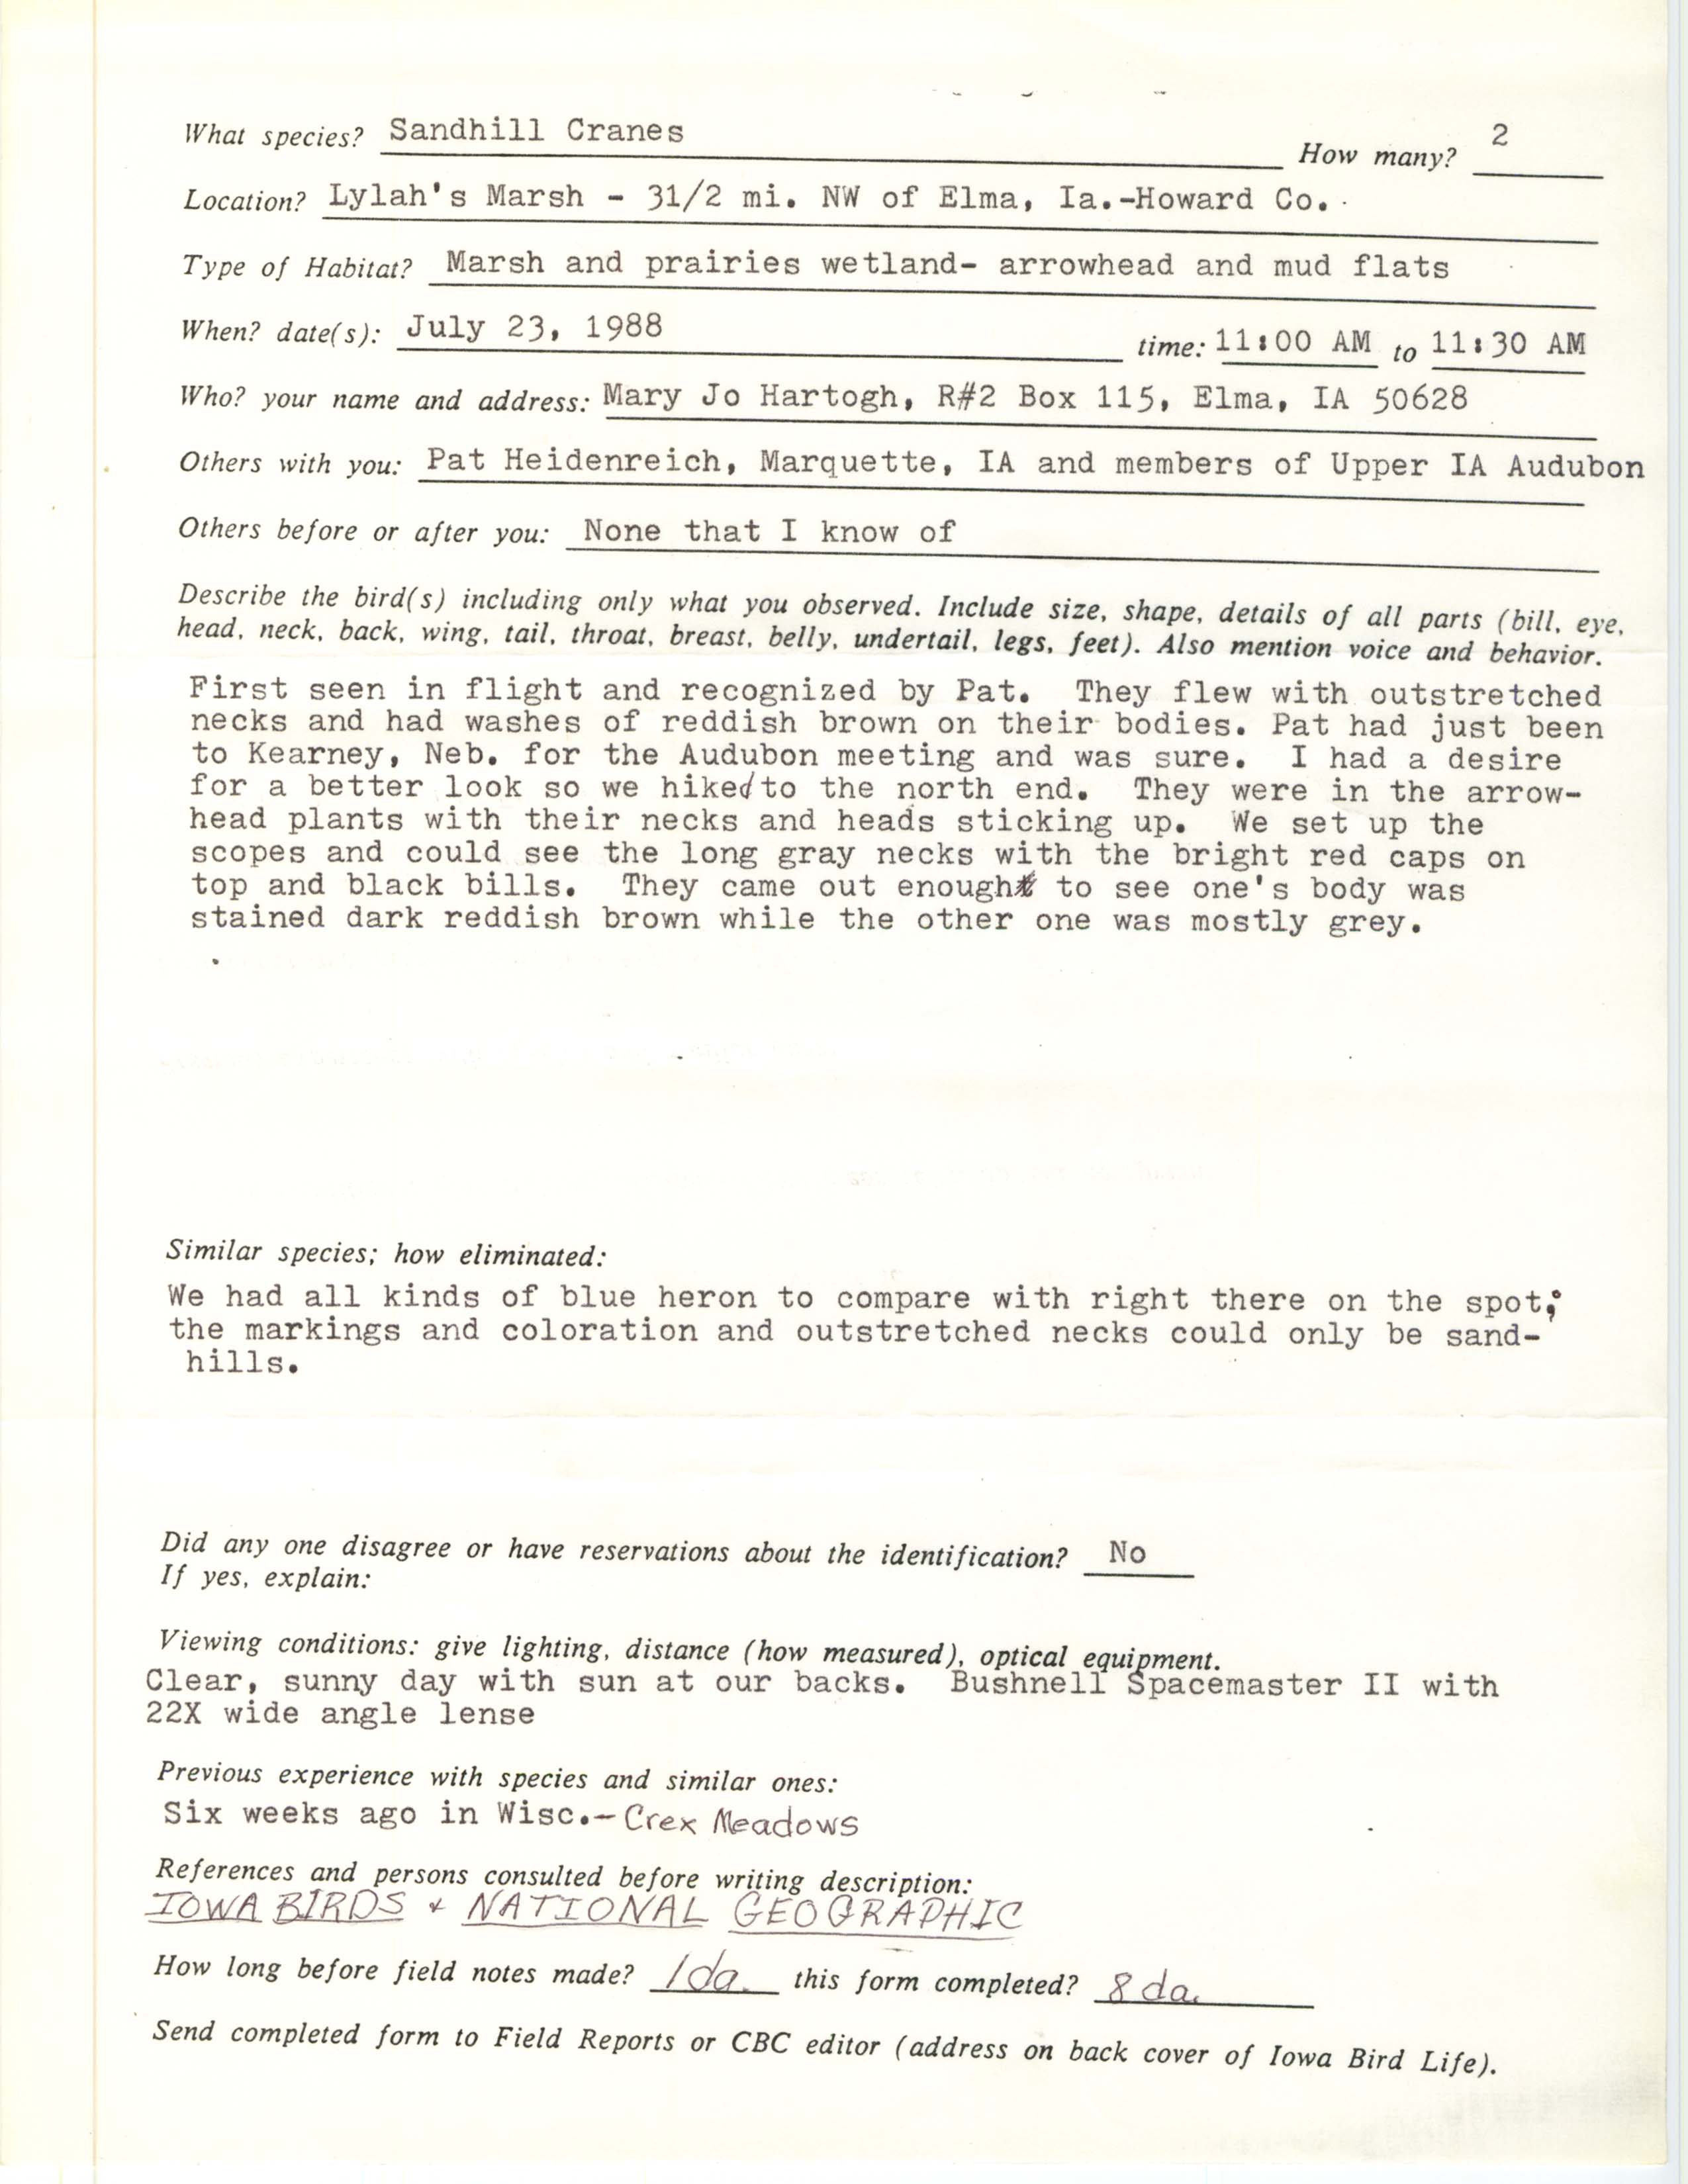 Rare bird documentation form for Sandhill Crane at Lylah's Marsh, 1988